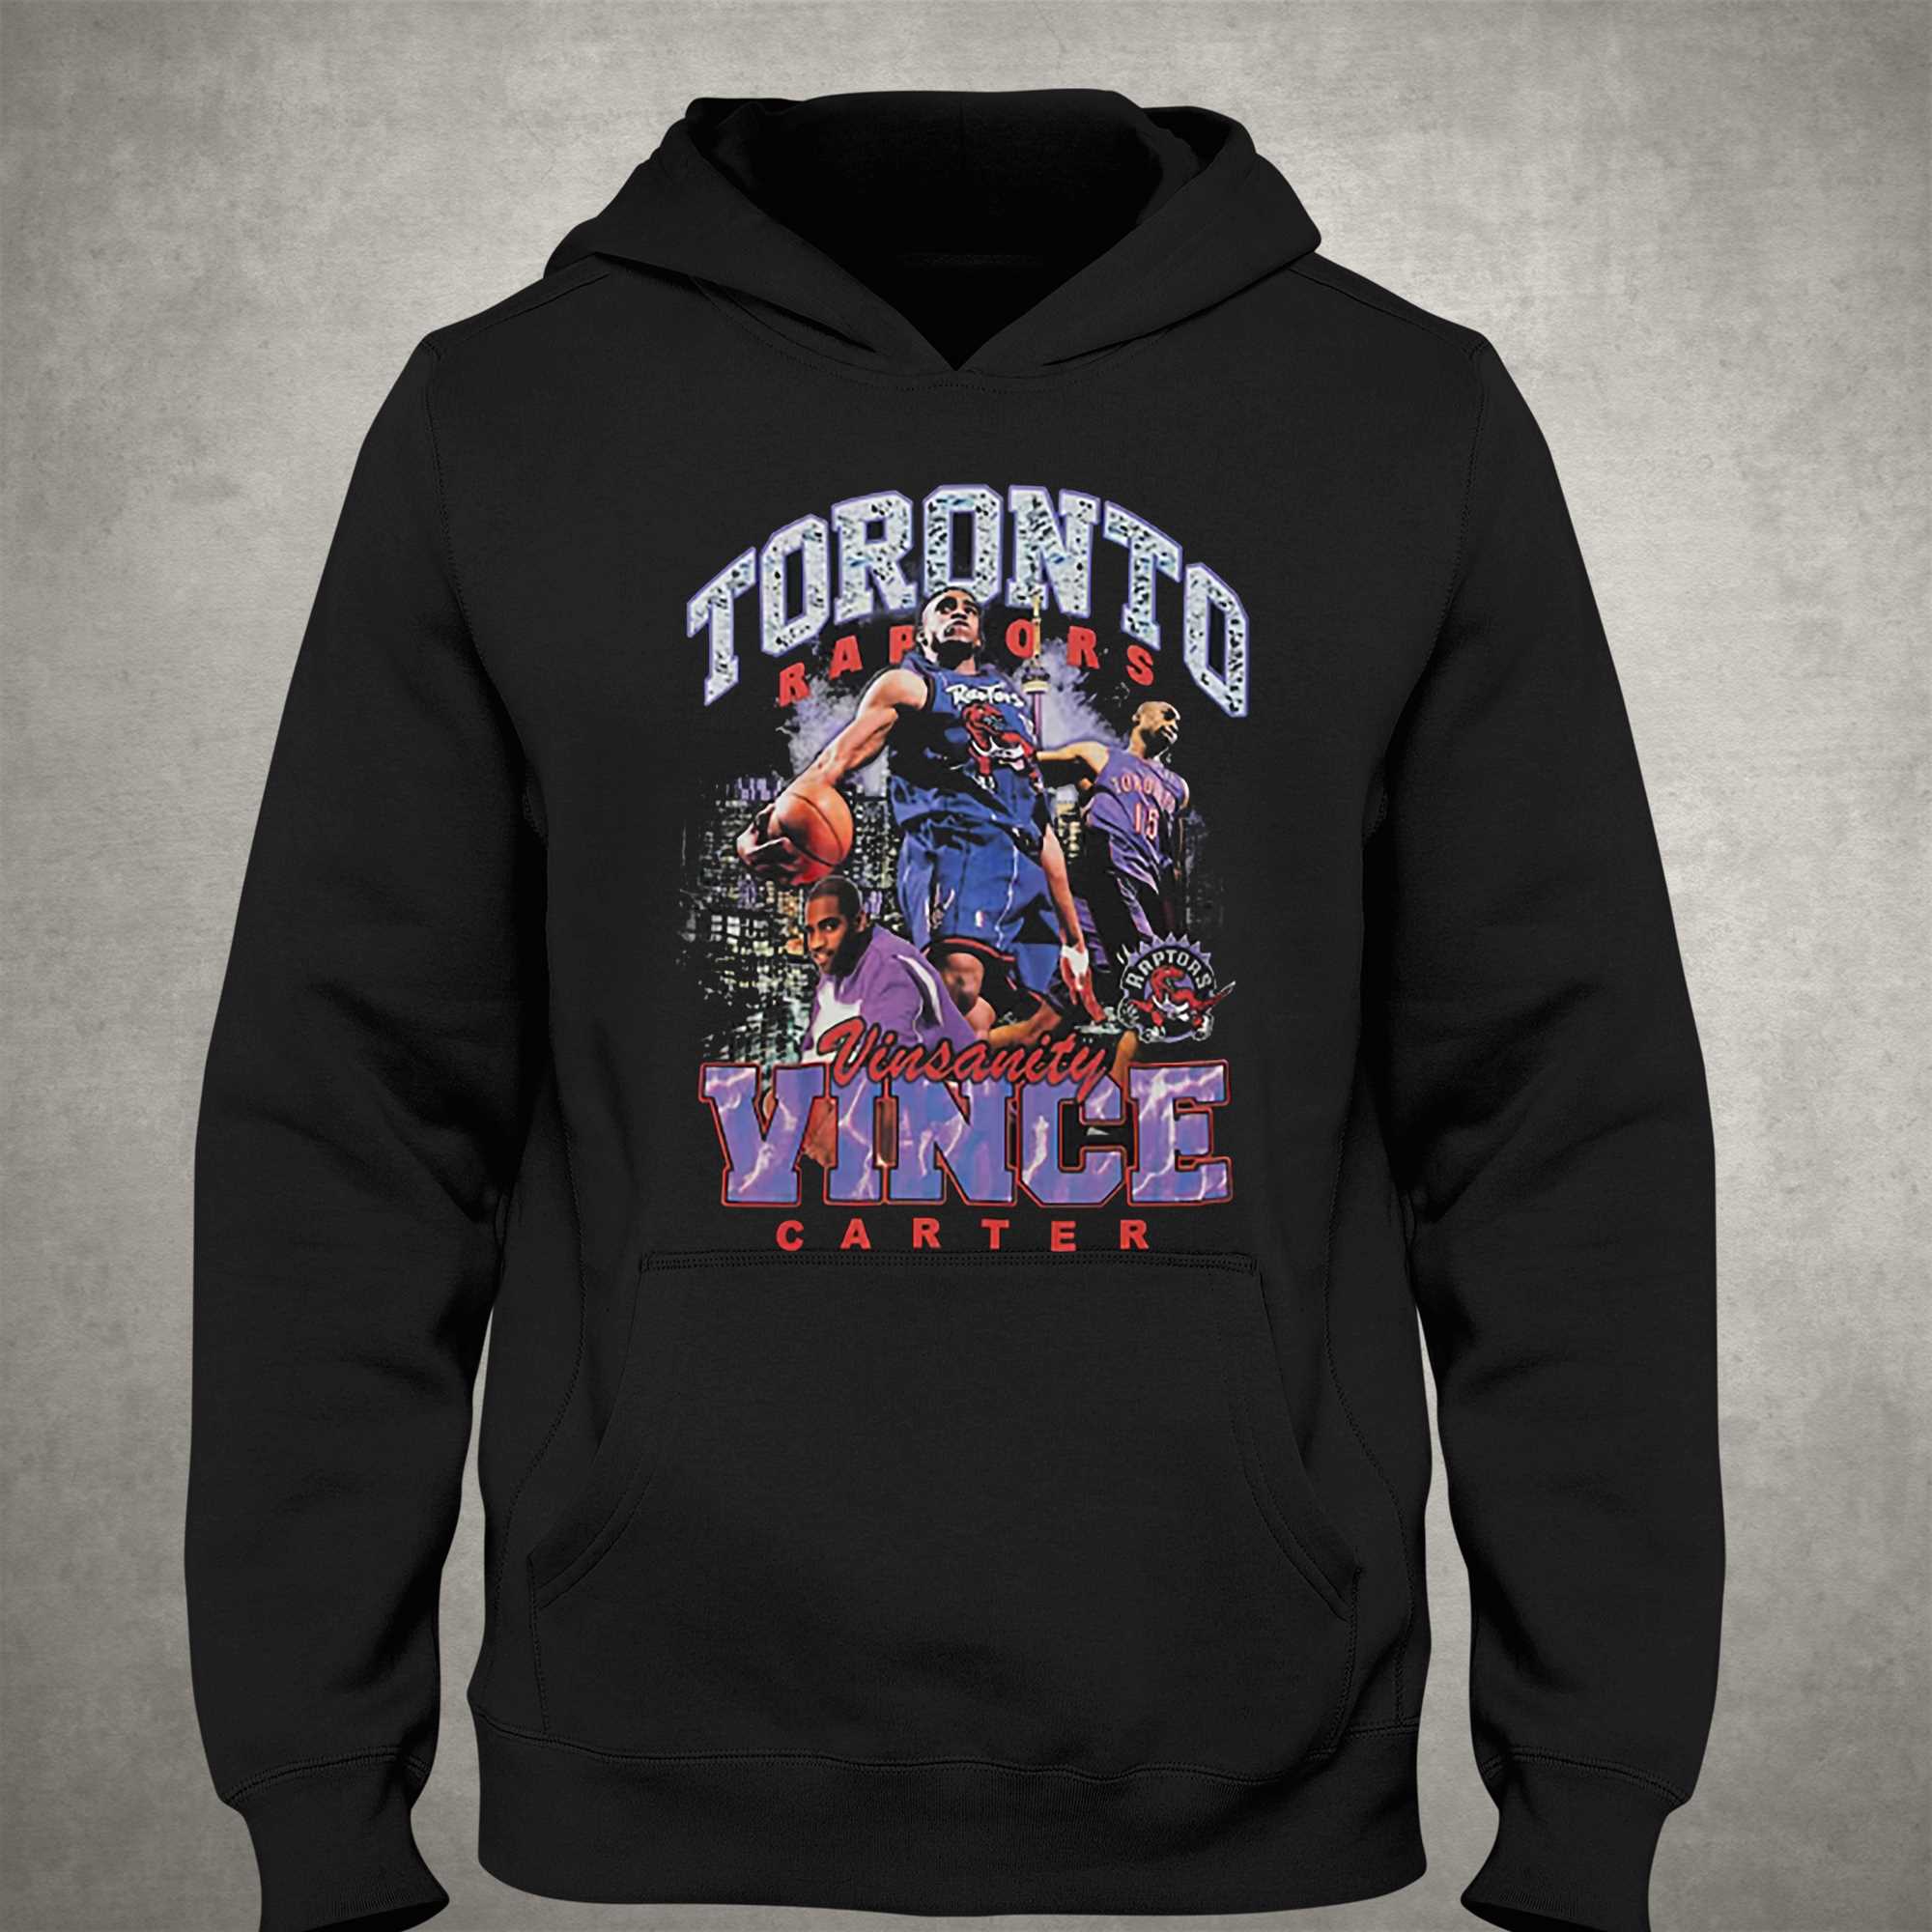 Vince Carter Toronto Raptors Mitchell & Ness